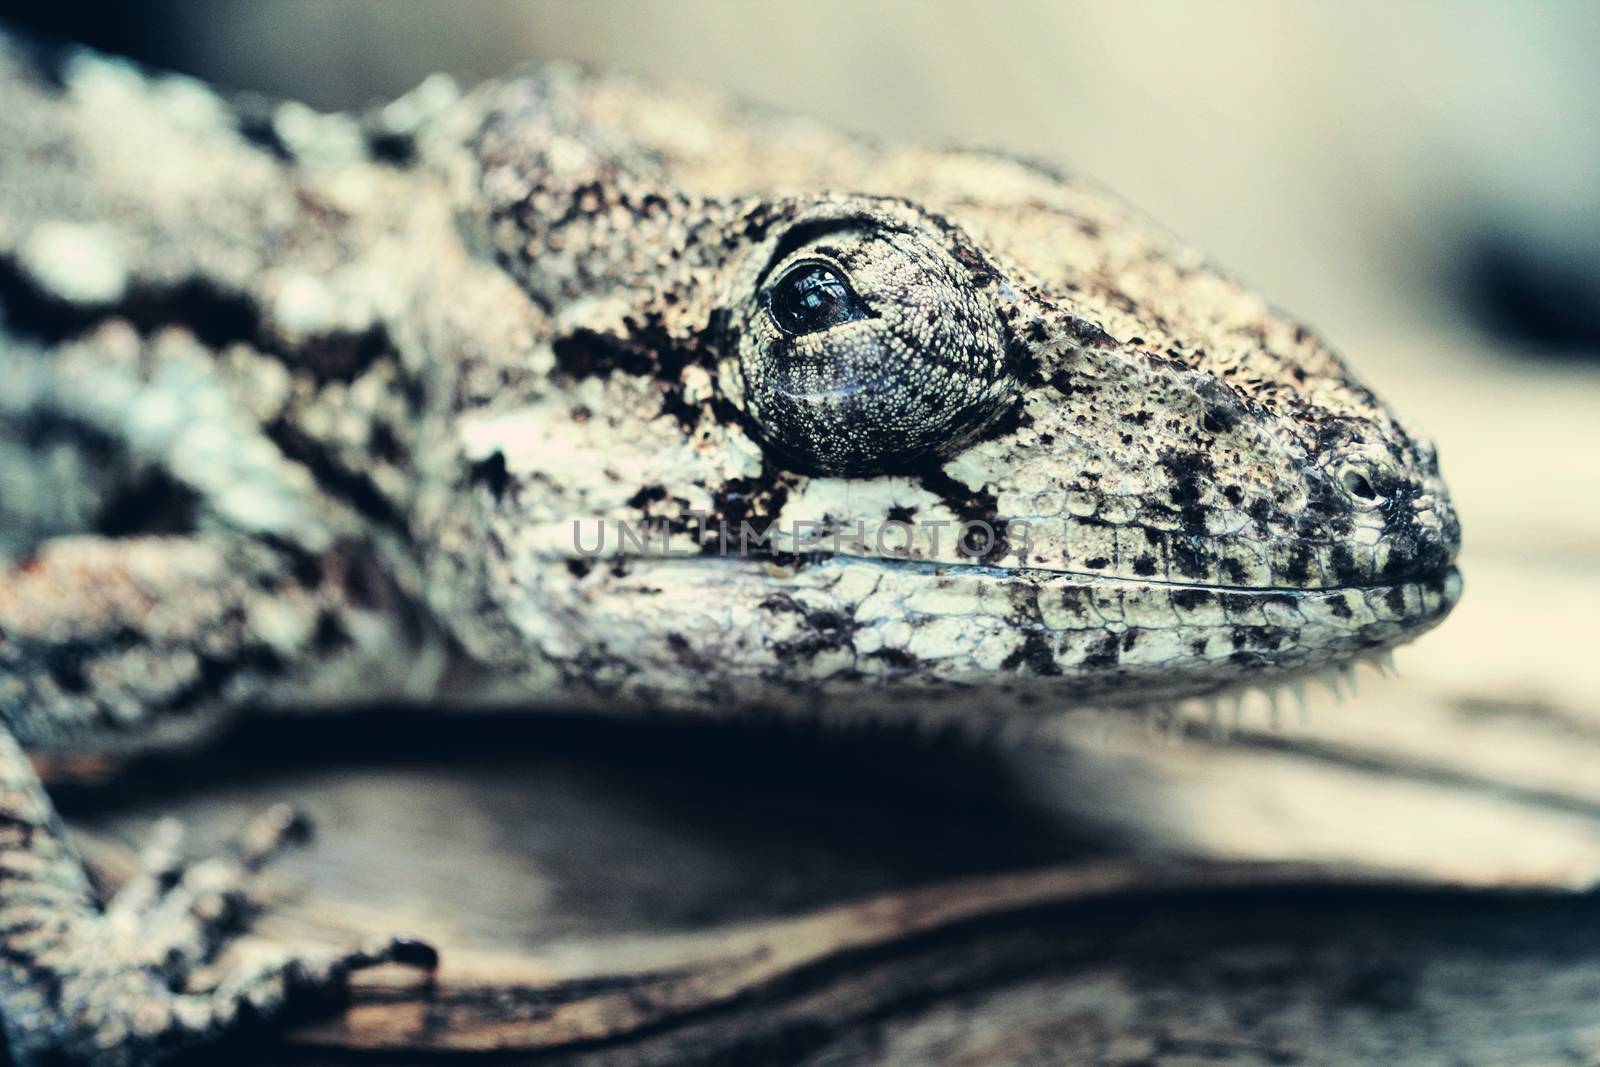 Lizard close up animal portrait by Voinakh